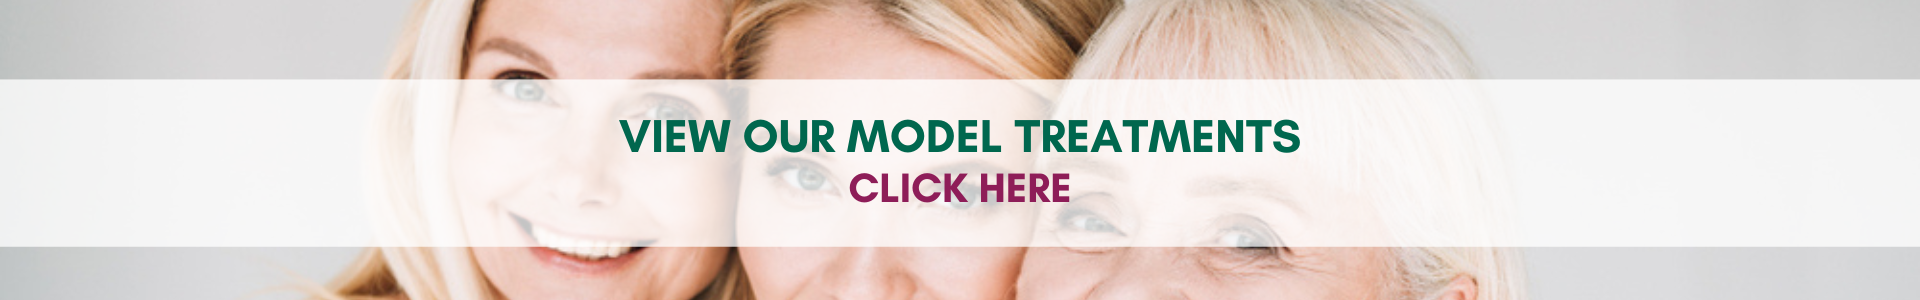 Model Treatments